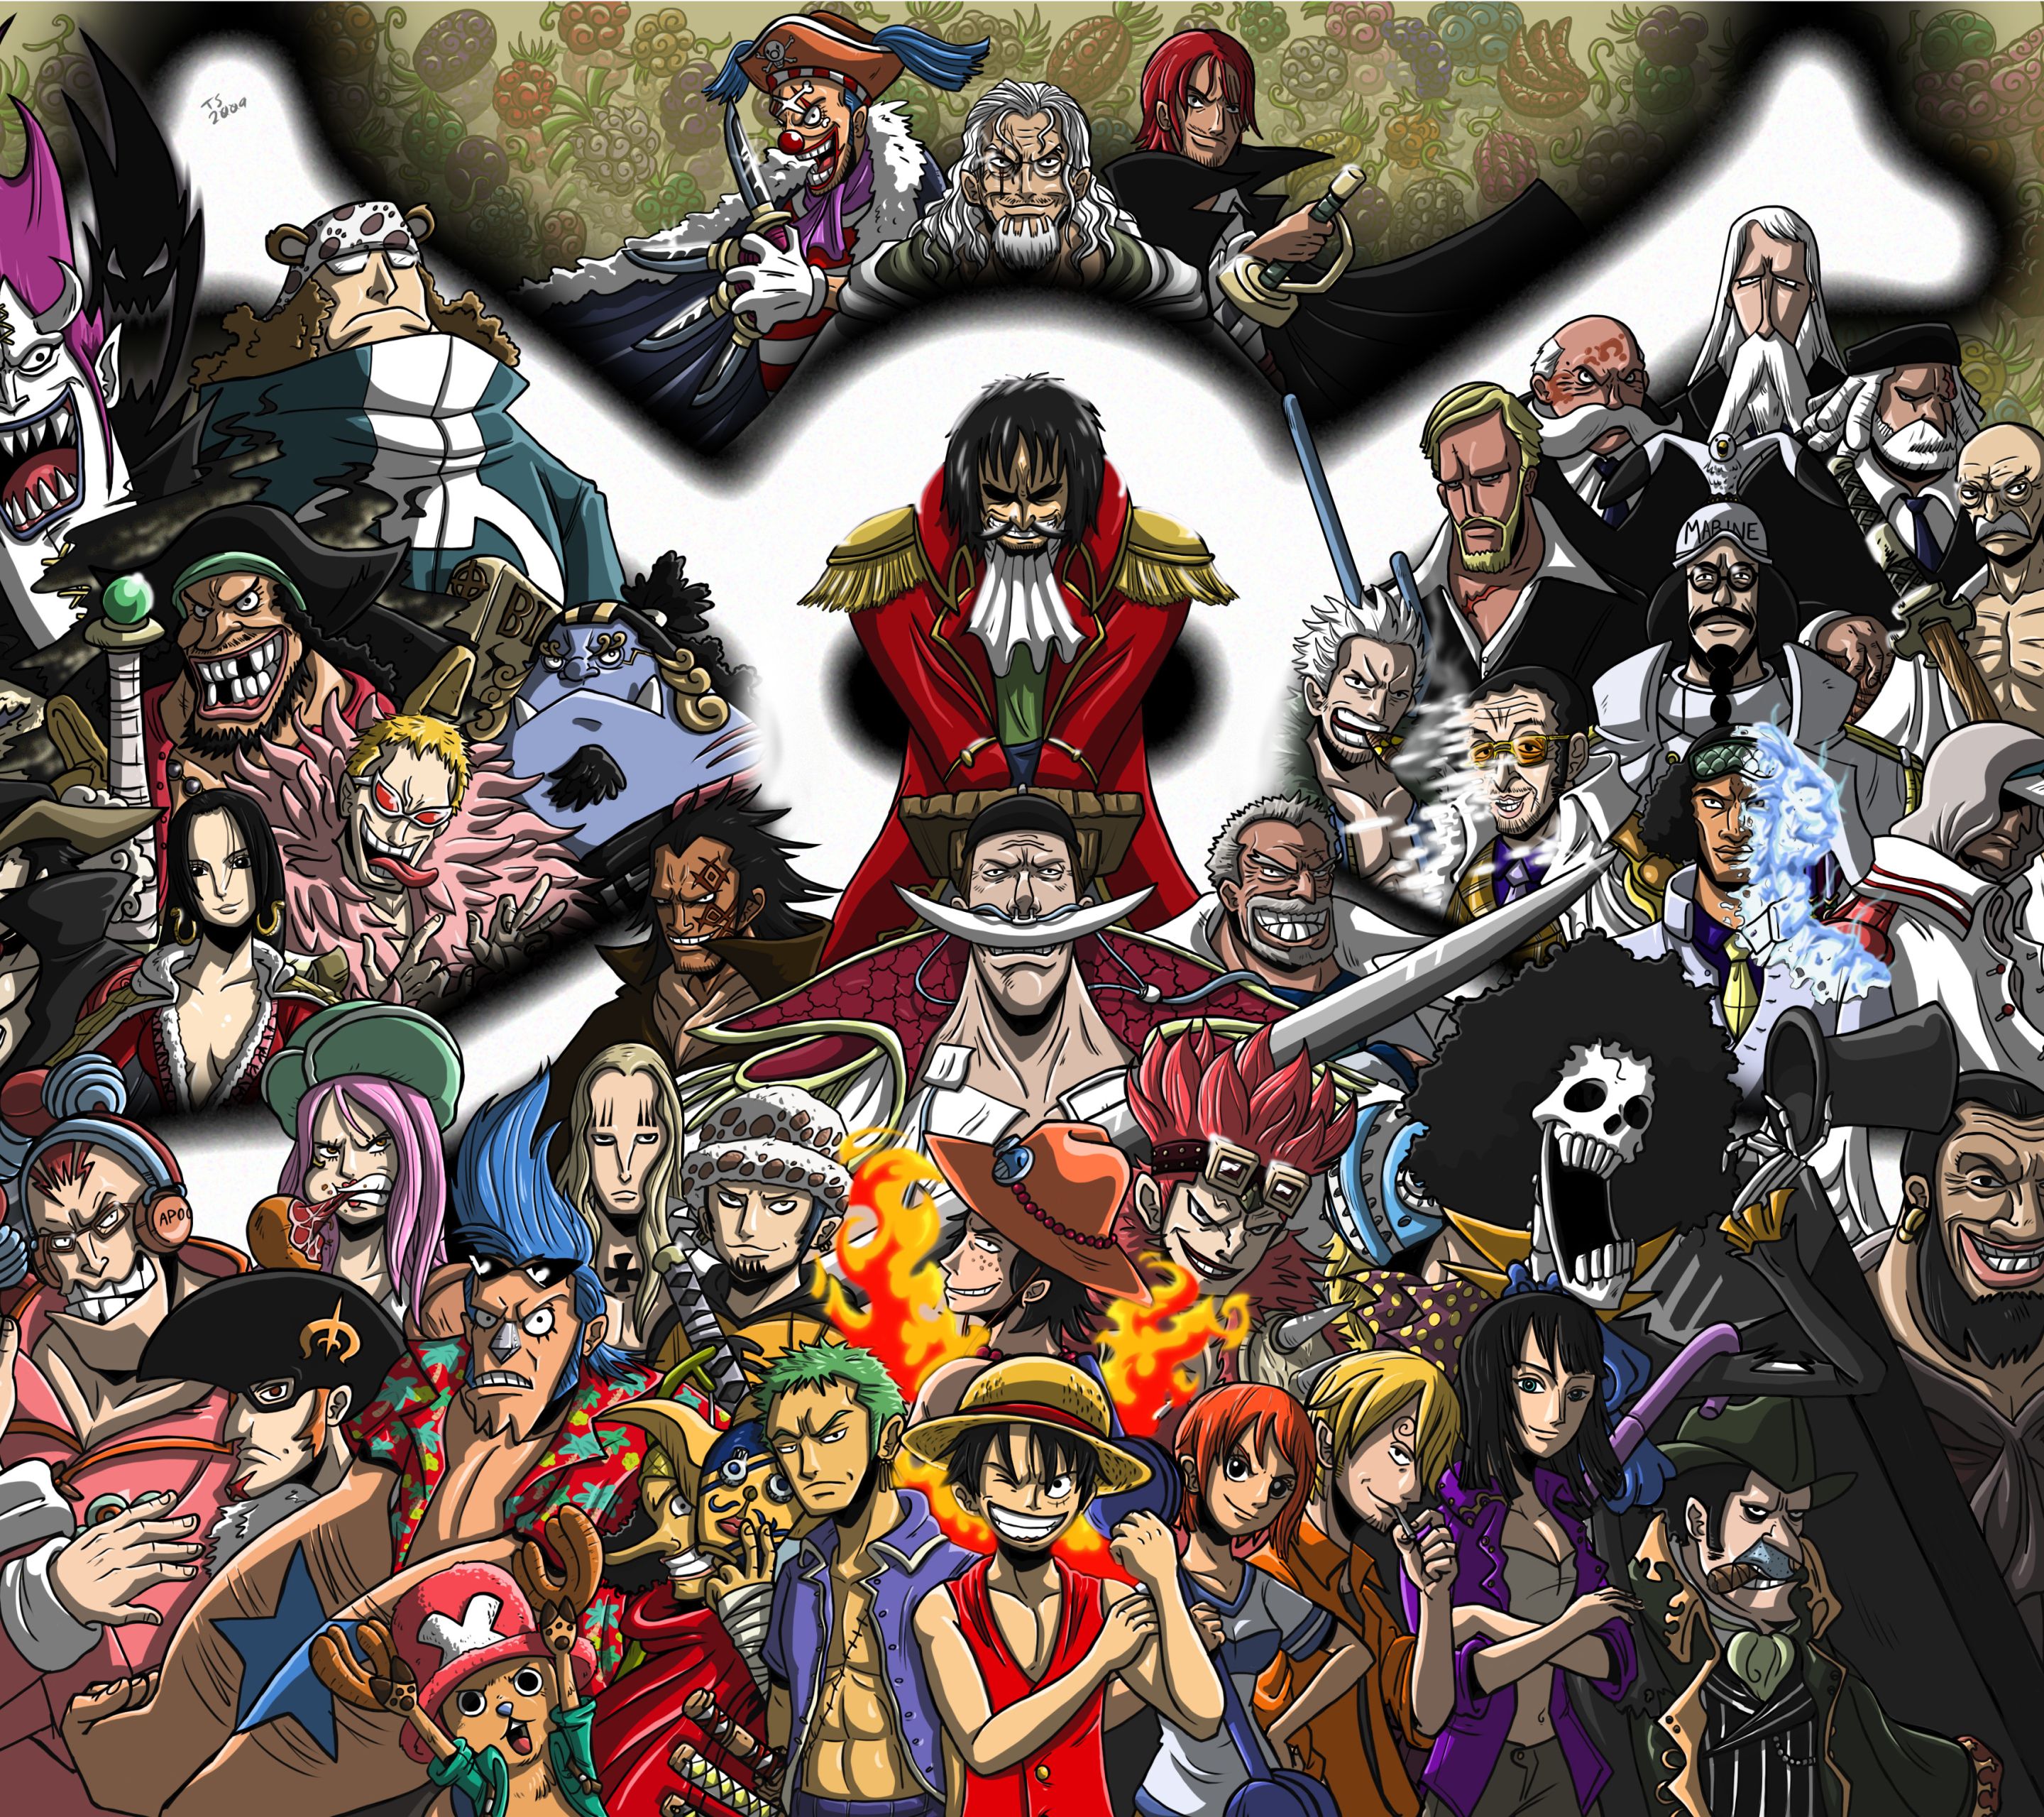 Unique Anime One Piece HD Wallpaper for S7 Edge